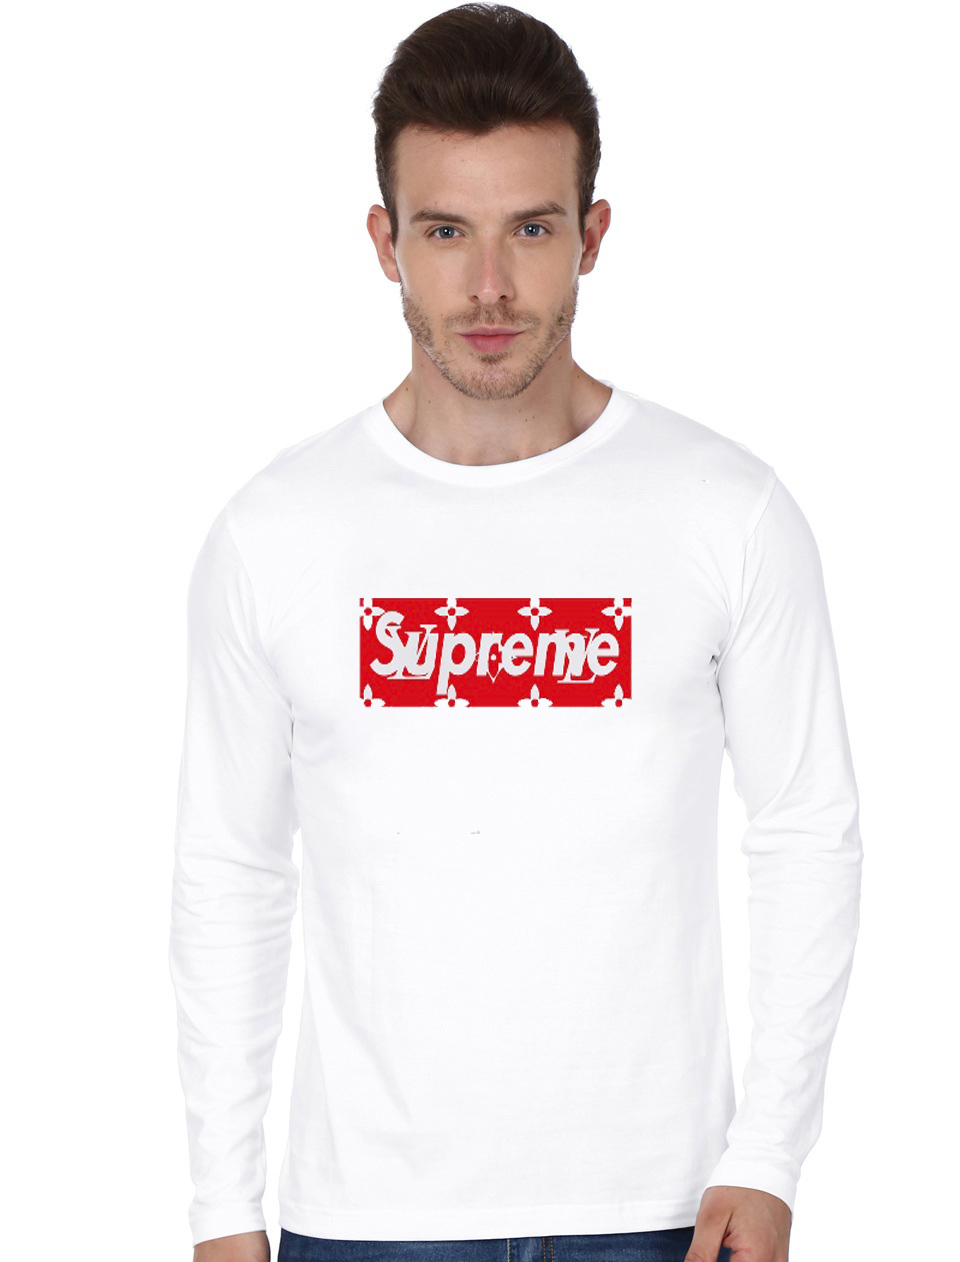 Supreme Long-sleeve t-shirts for Men